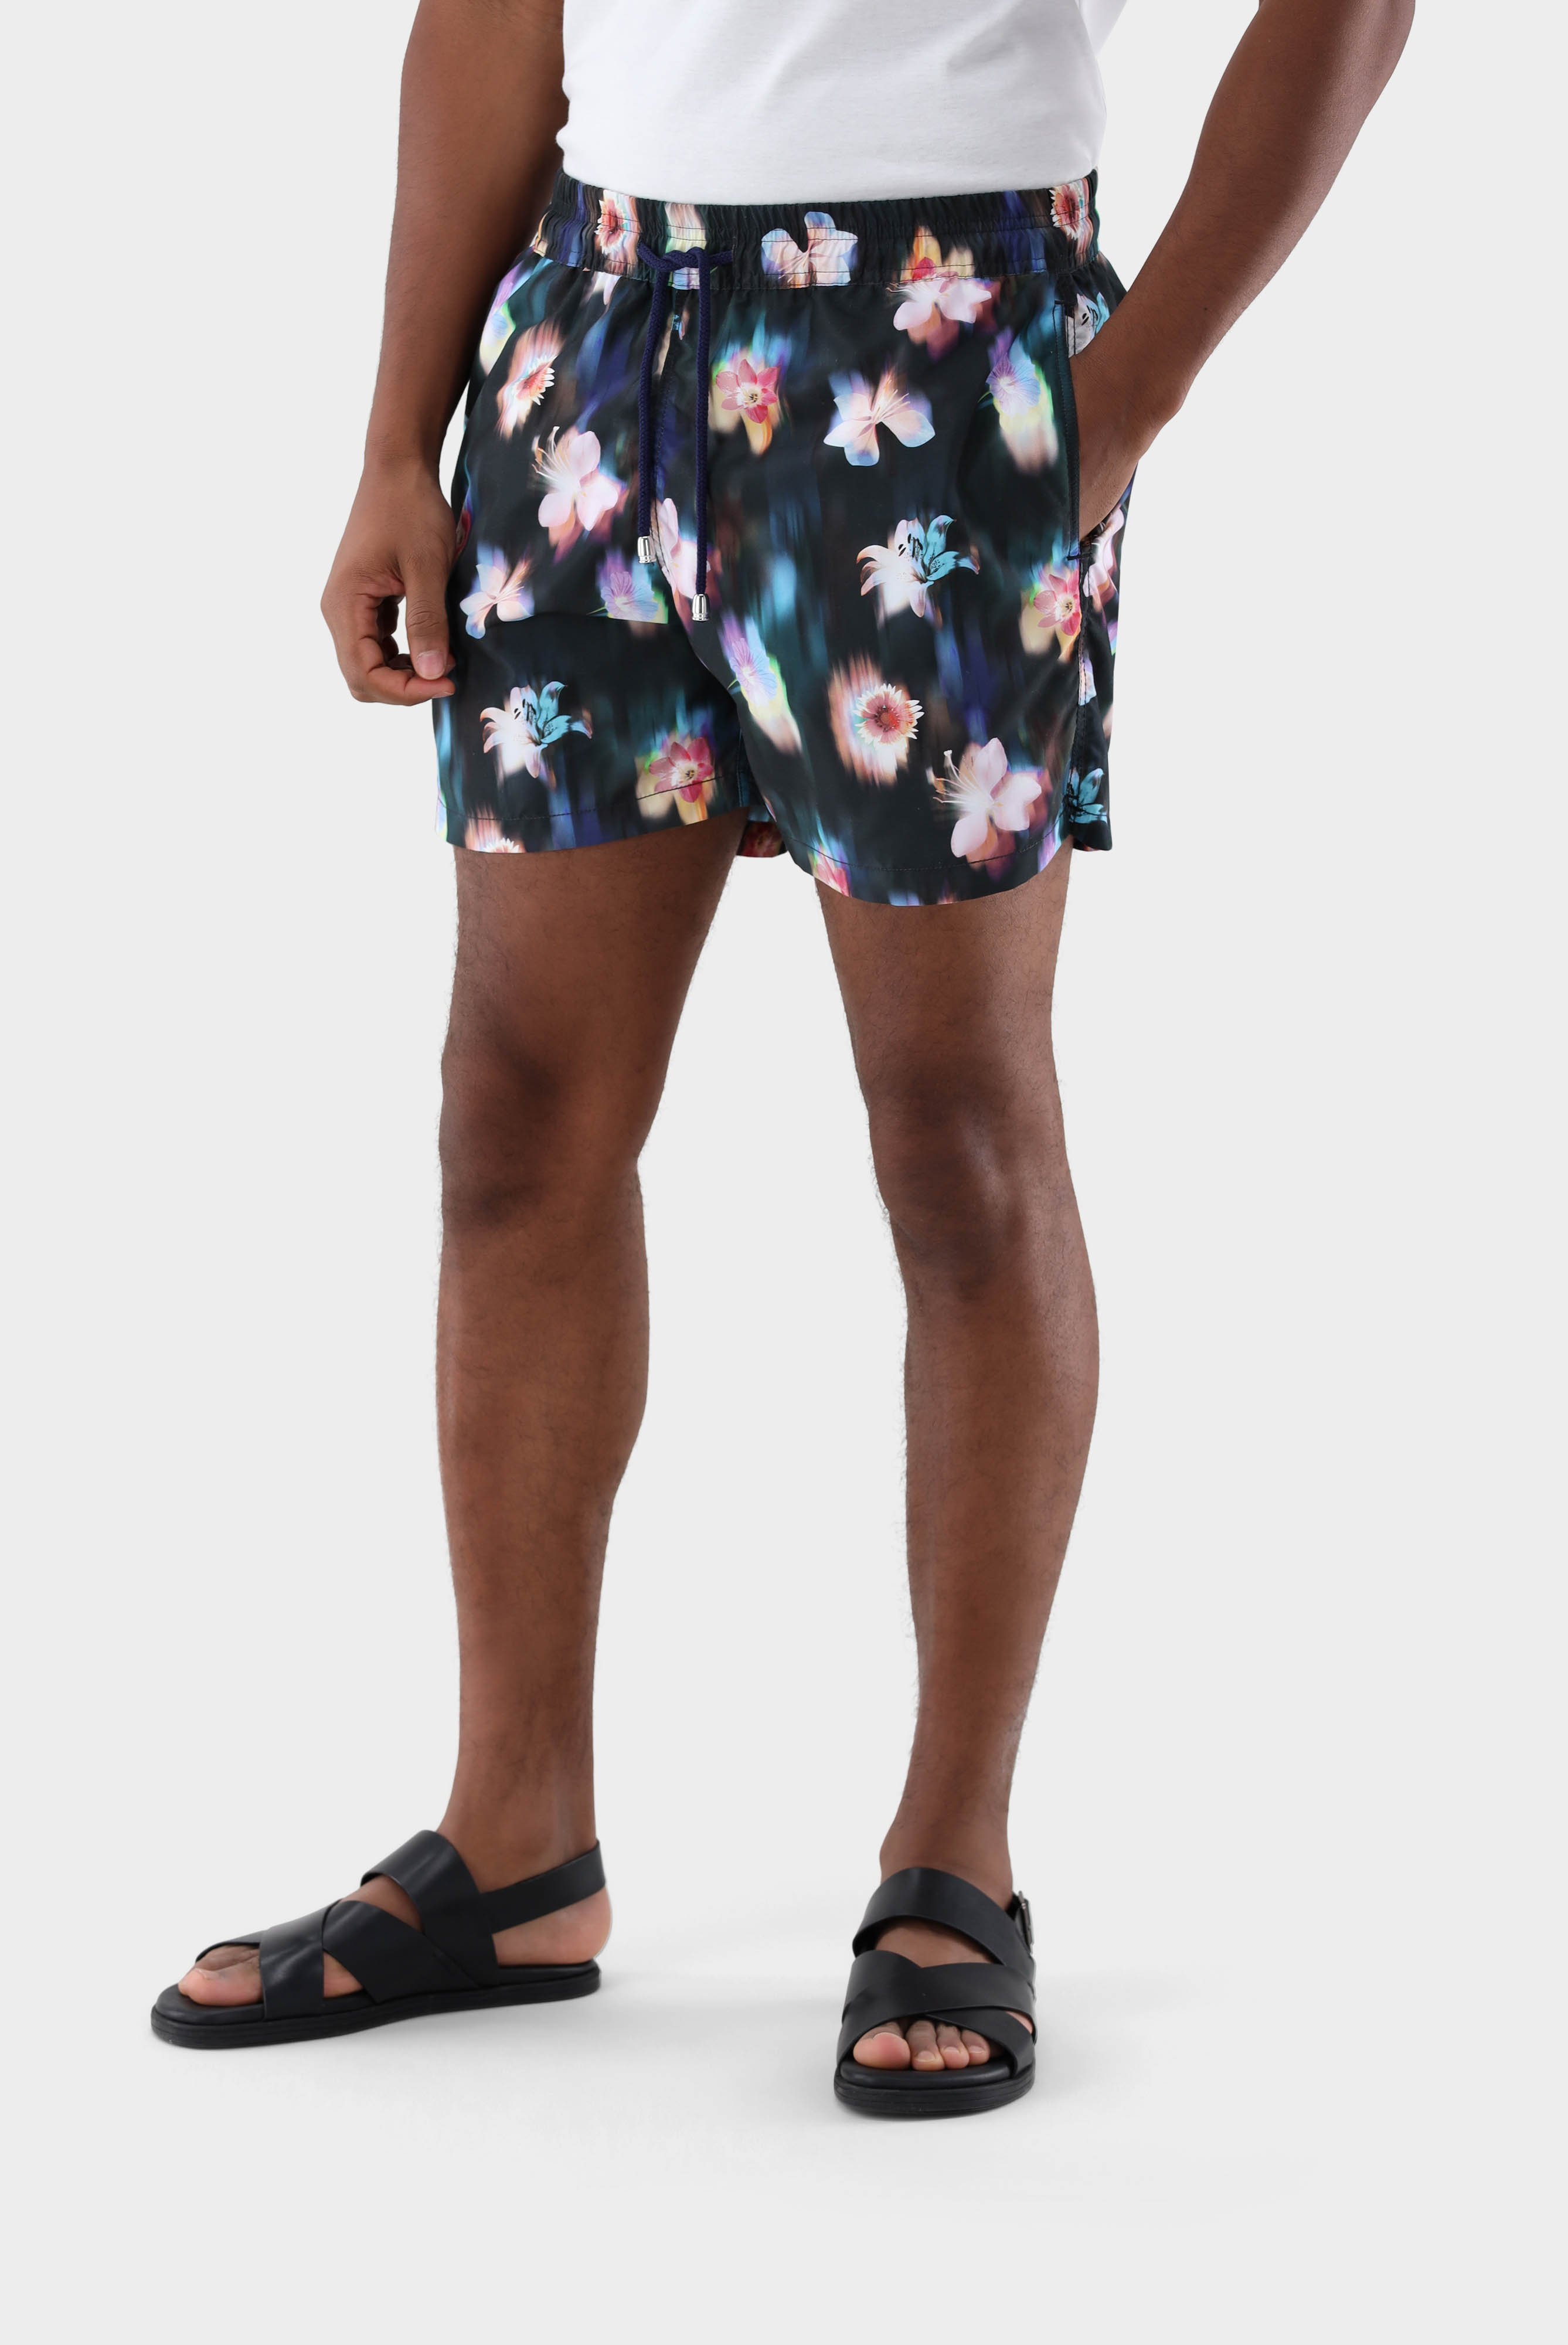 Swimwear+Swim Shorts with Floral Print+91.1179..170746.783.48